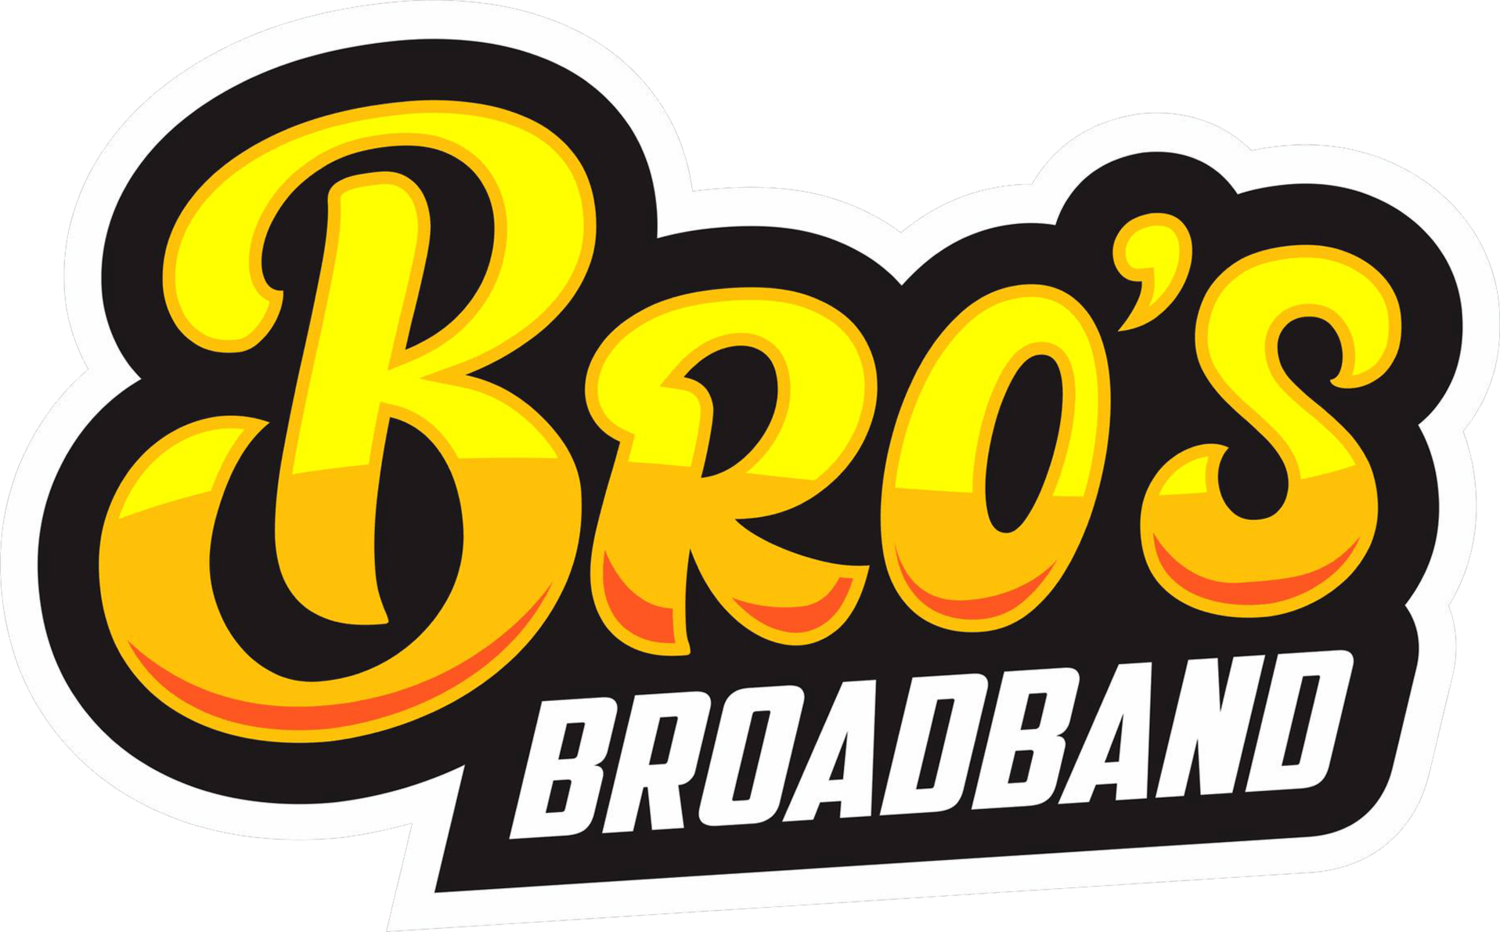 Bros Broadband